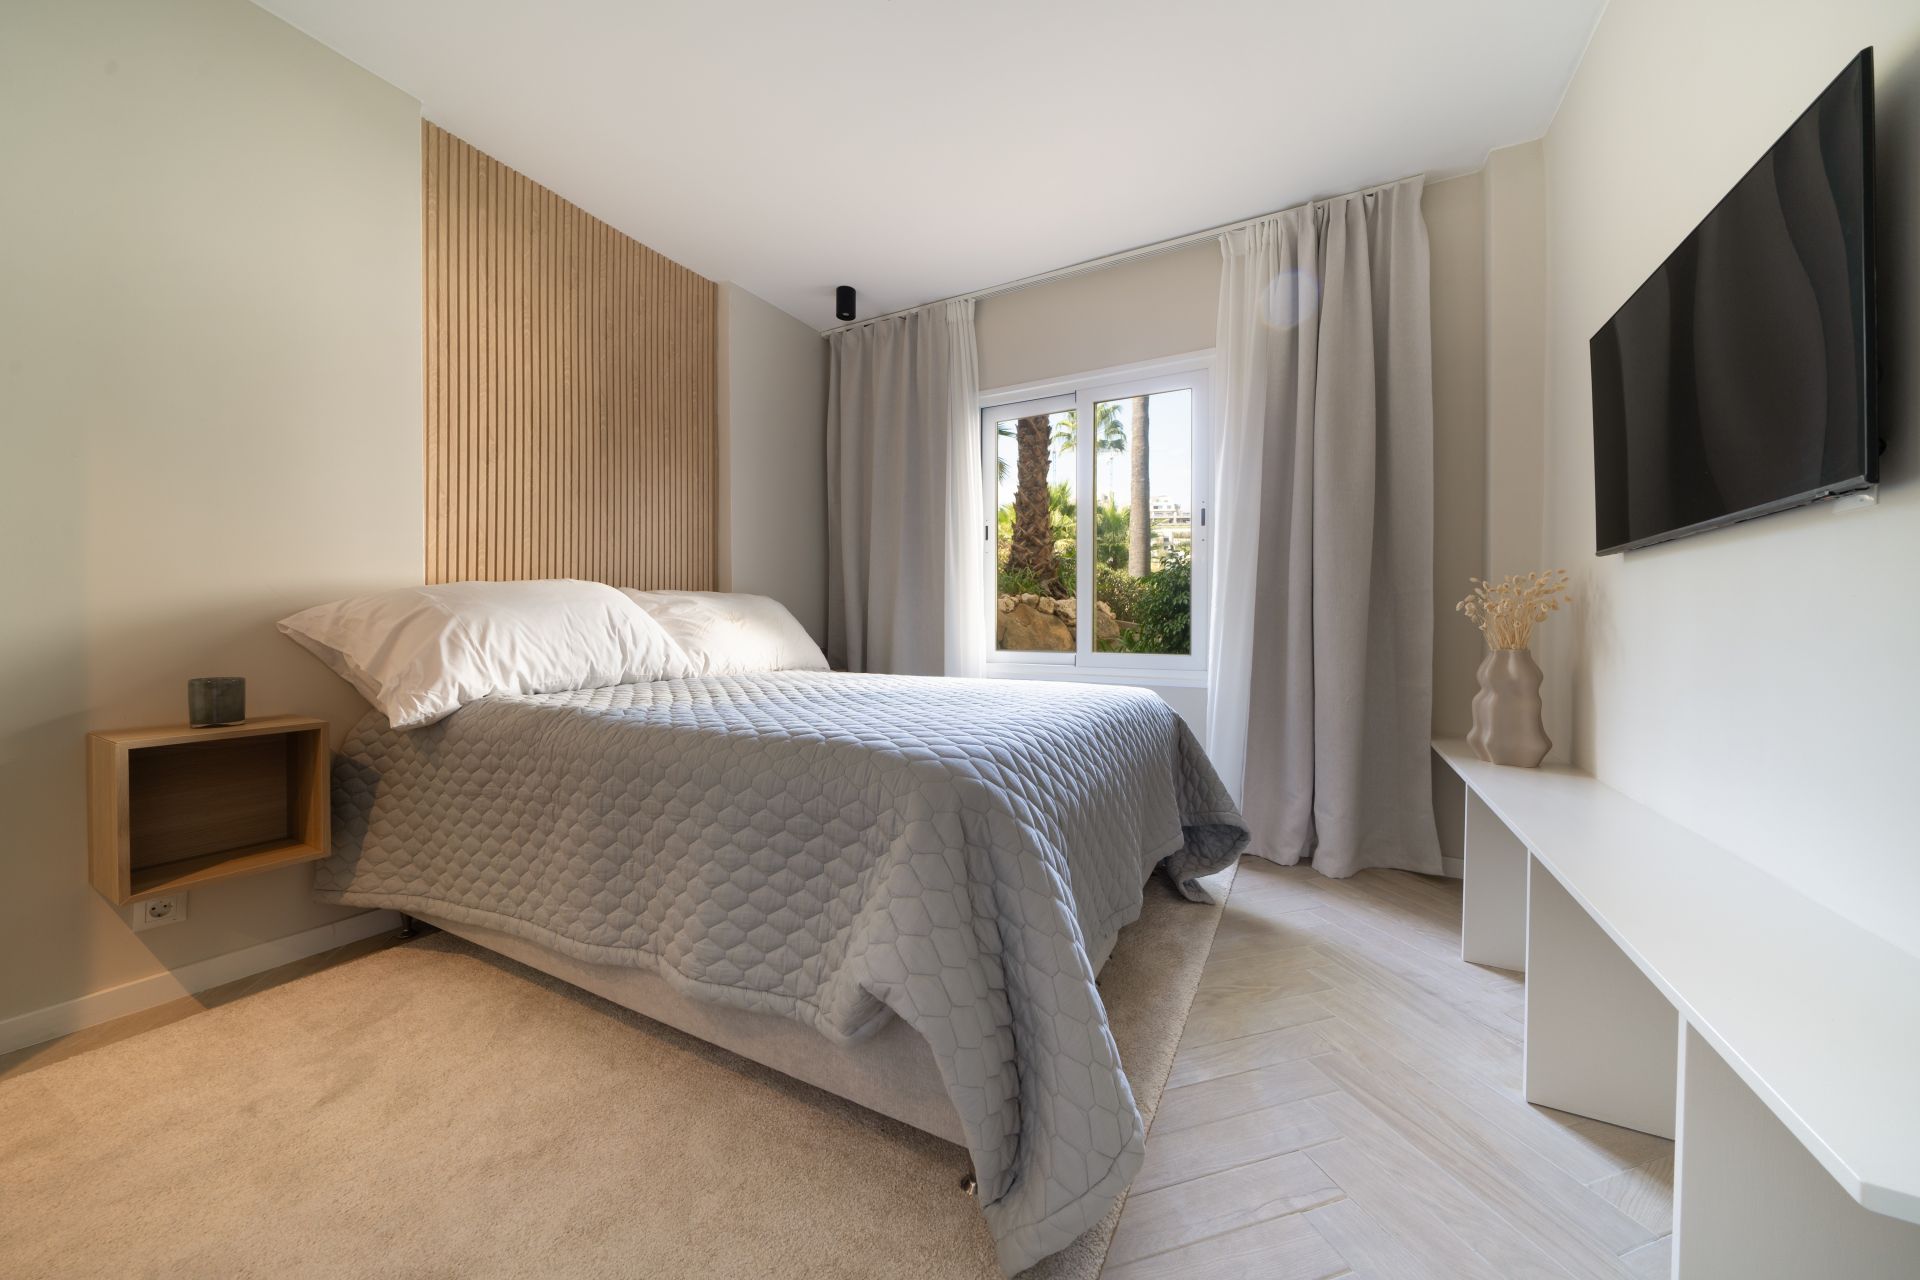 La Cerquilla: Exquisite 3-bedroom apartment with private garden in a ...